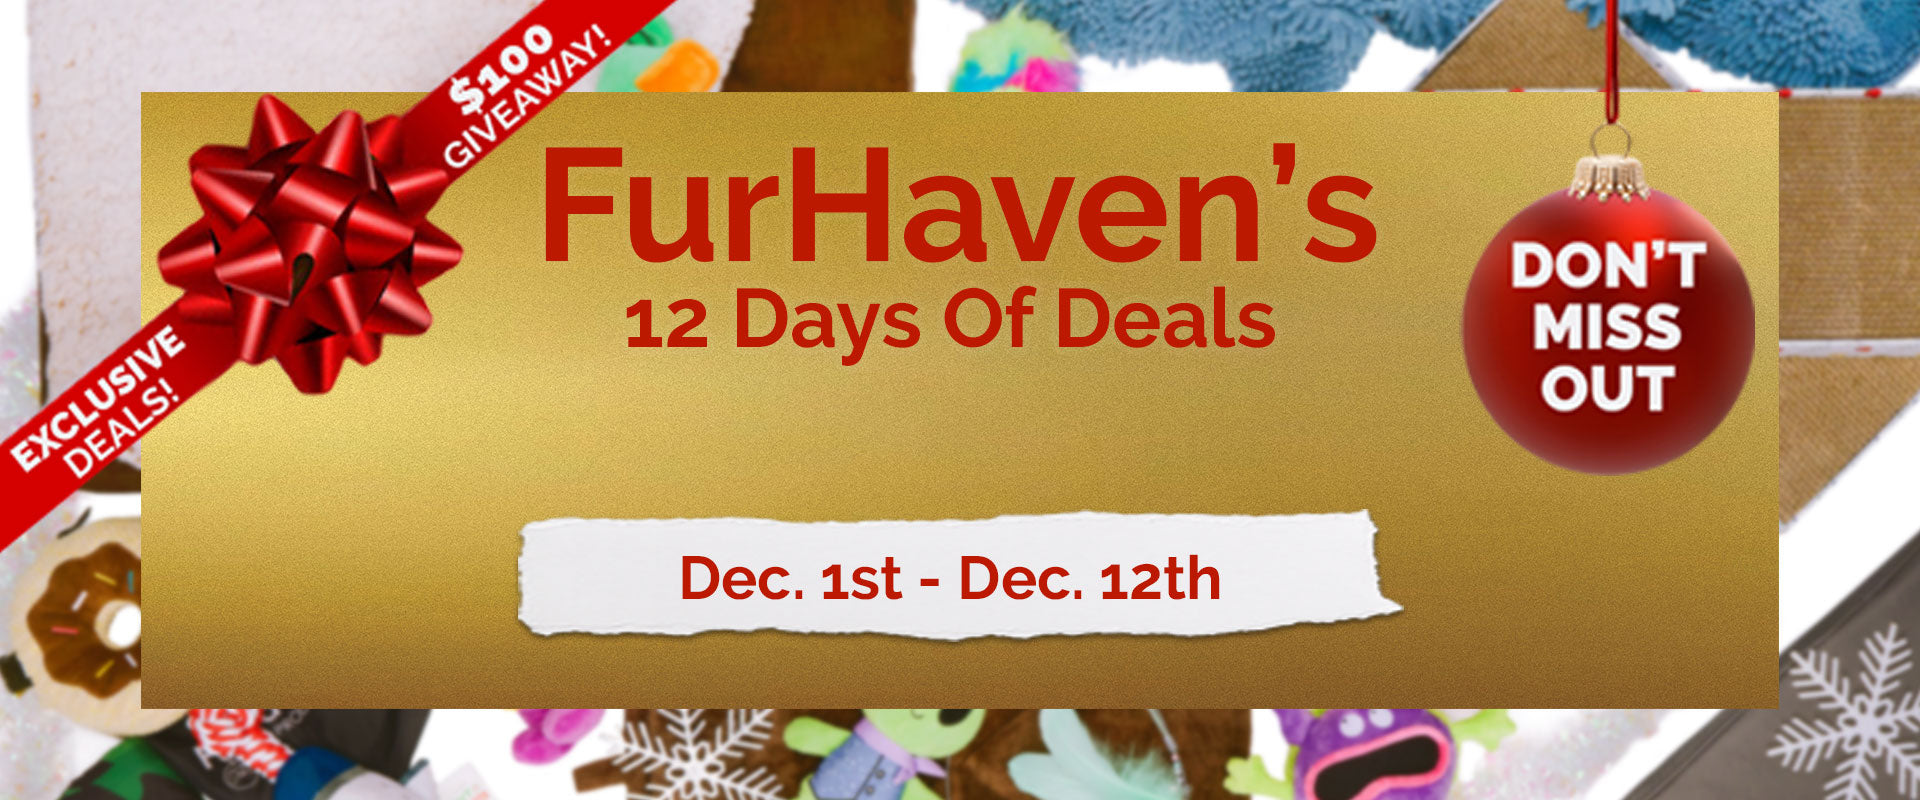 FurHaven Winter Wonder-Mint Holiday Slow Feeder Dog Toy